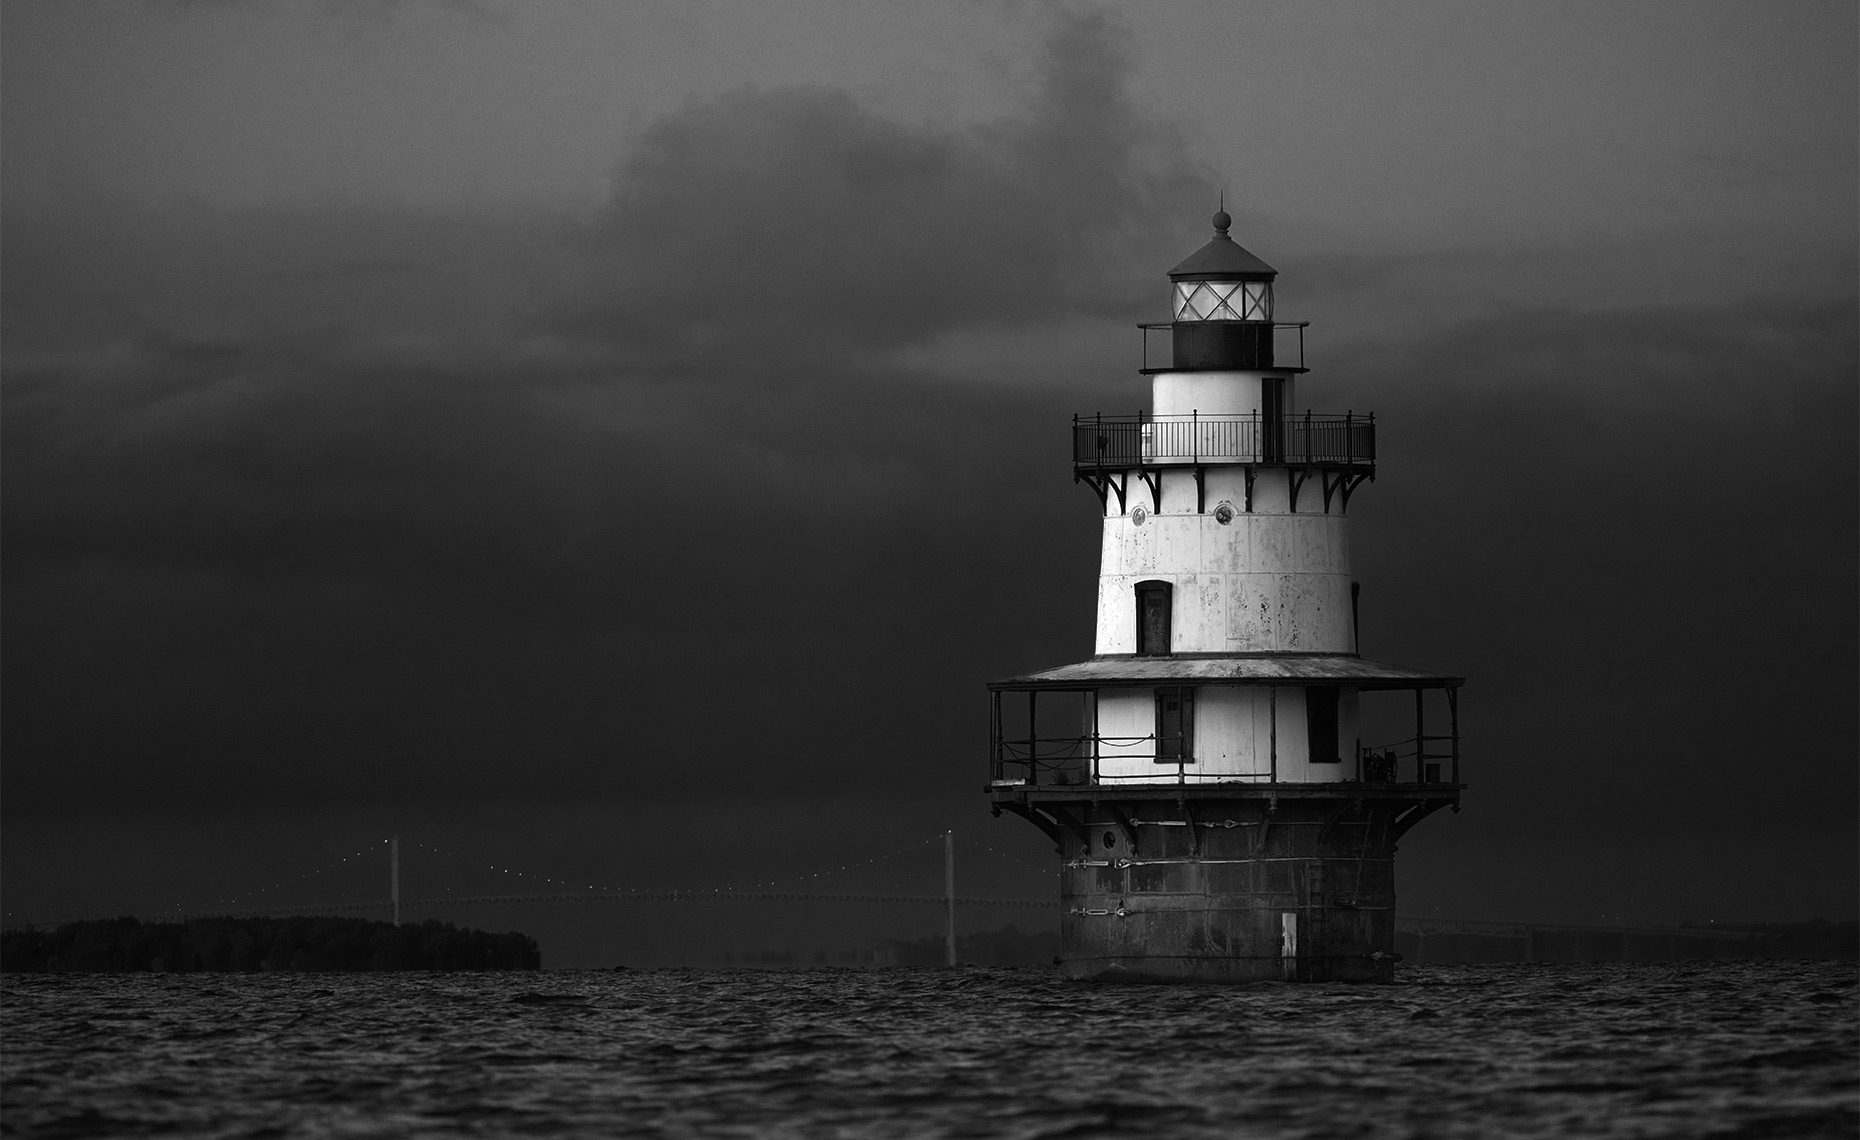 Hog island lighthouse